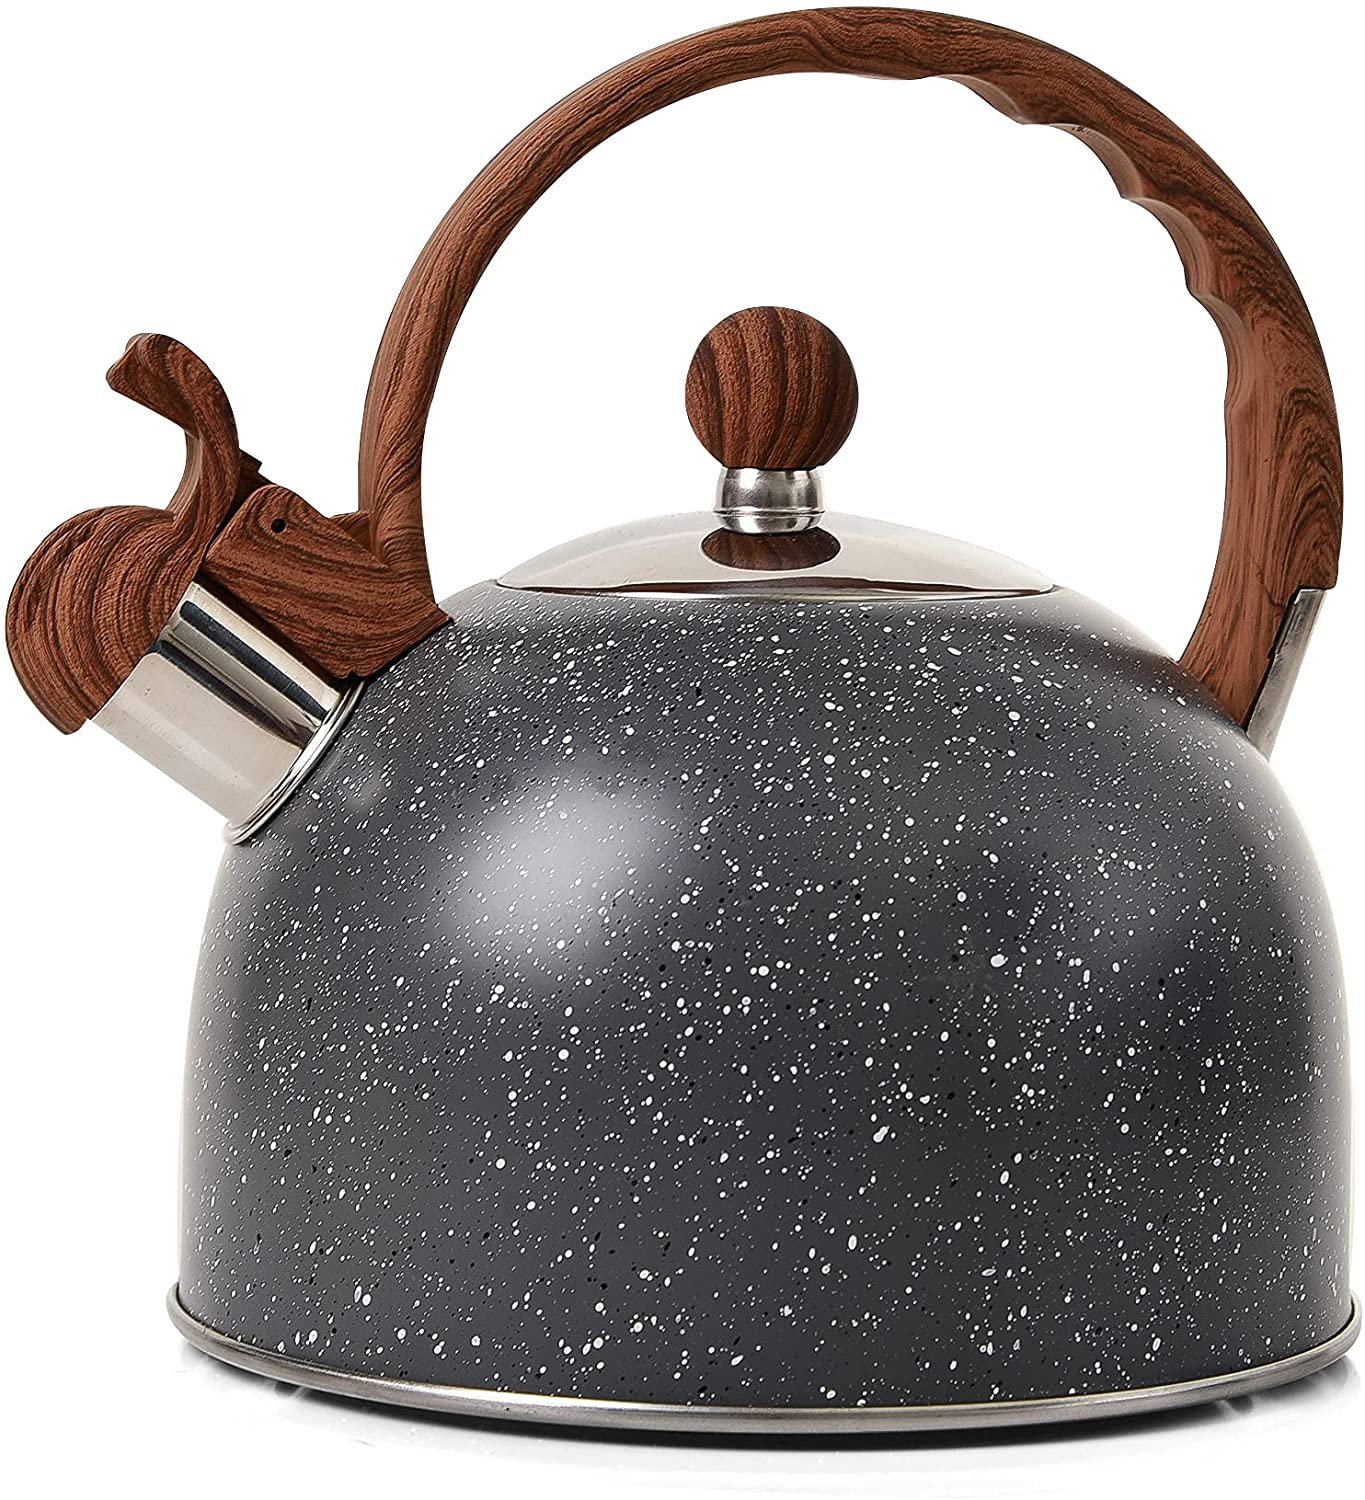 Tea Kettle - VONIKI 2.5 Quart Tea Kettles Stovetop Whistling Teapot Stainless Steel Tea Pots for Stove Top Whistle Tea Pot with Wood Pattern Anti-Hot Handle Teakettle Black